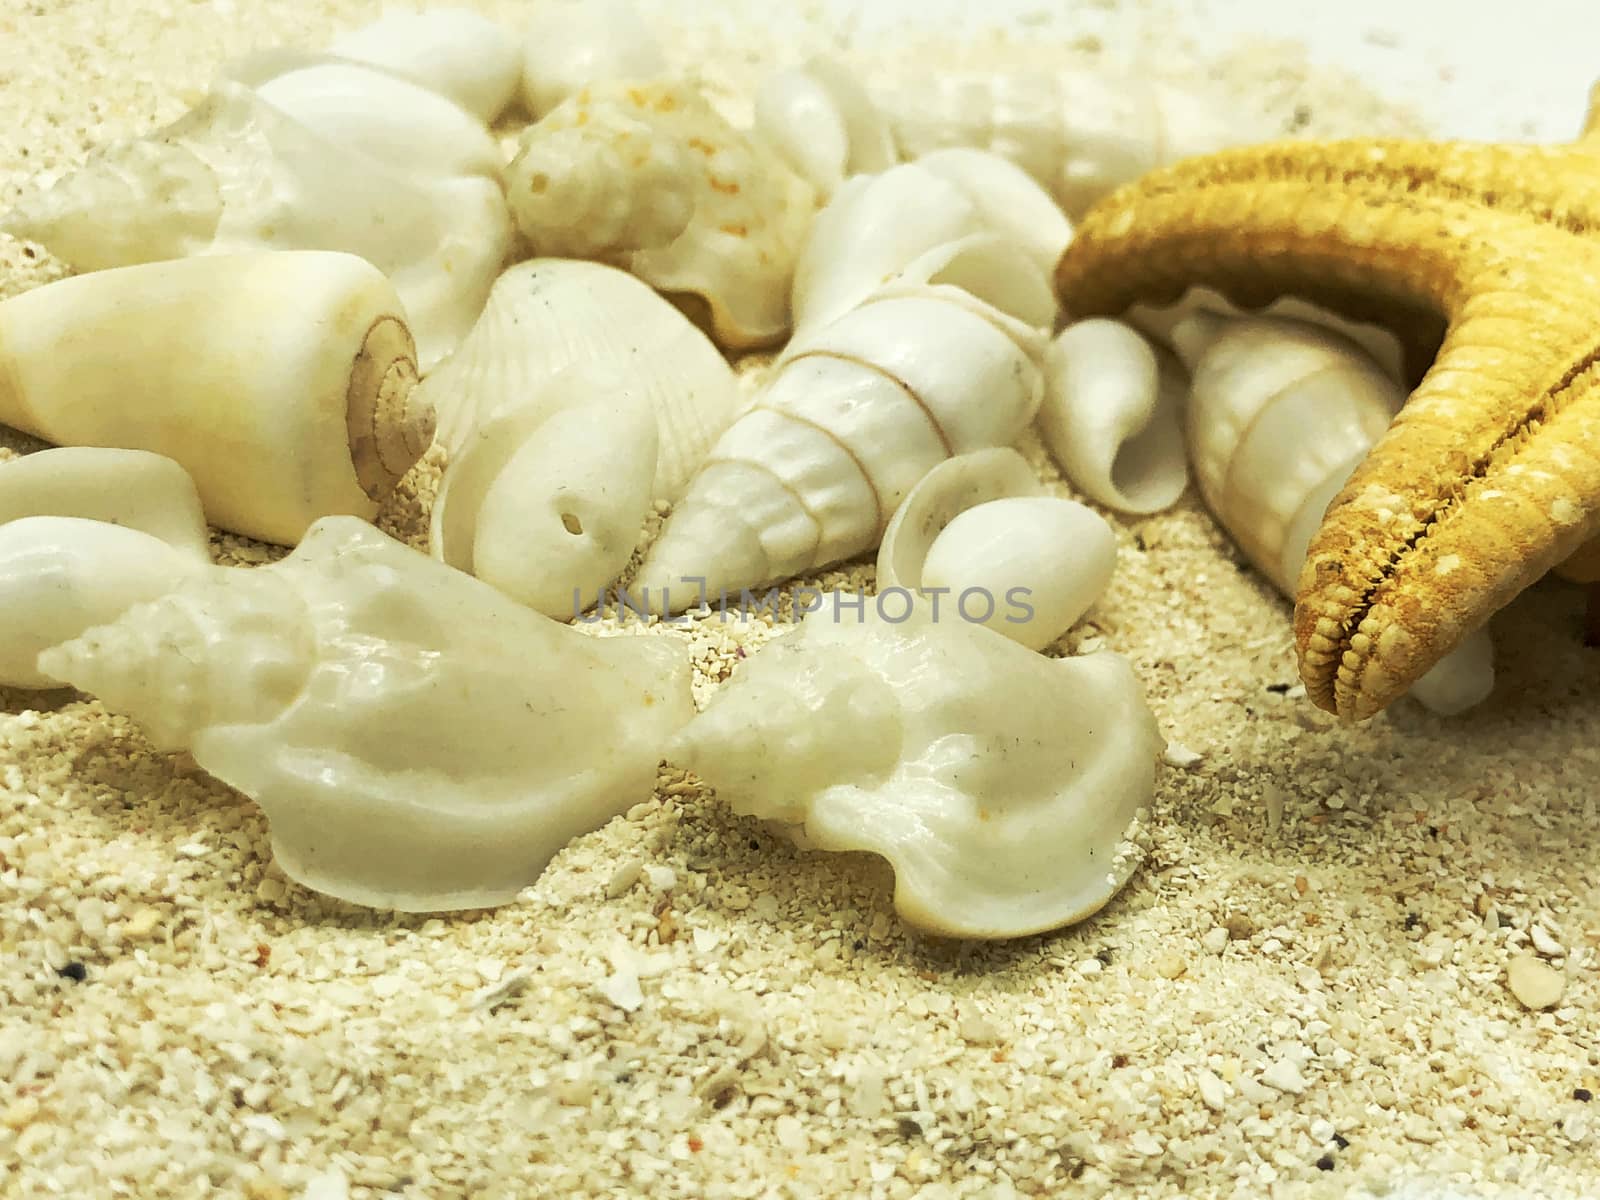 ocean sea shellfish and starfish closeup on sand texture detail summer season travel beach by F1b0nacci